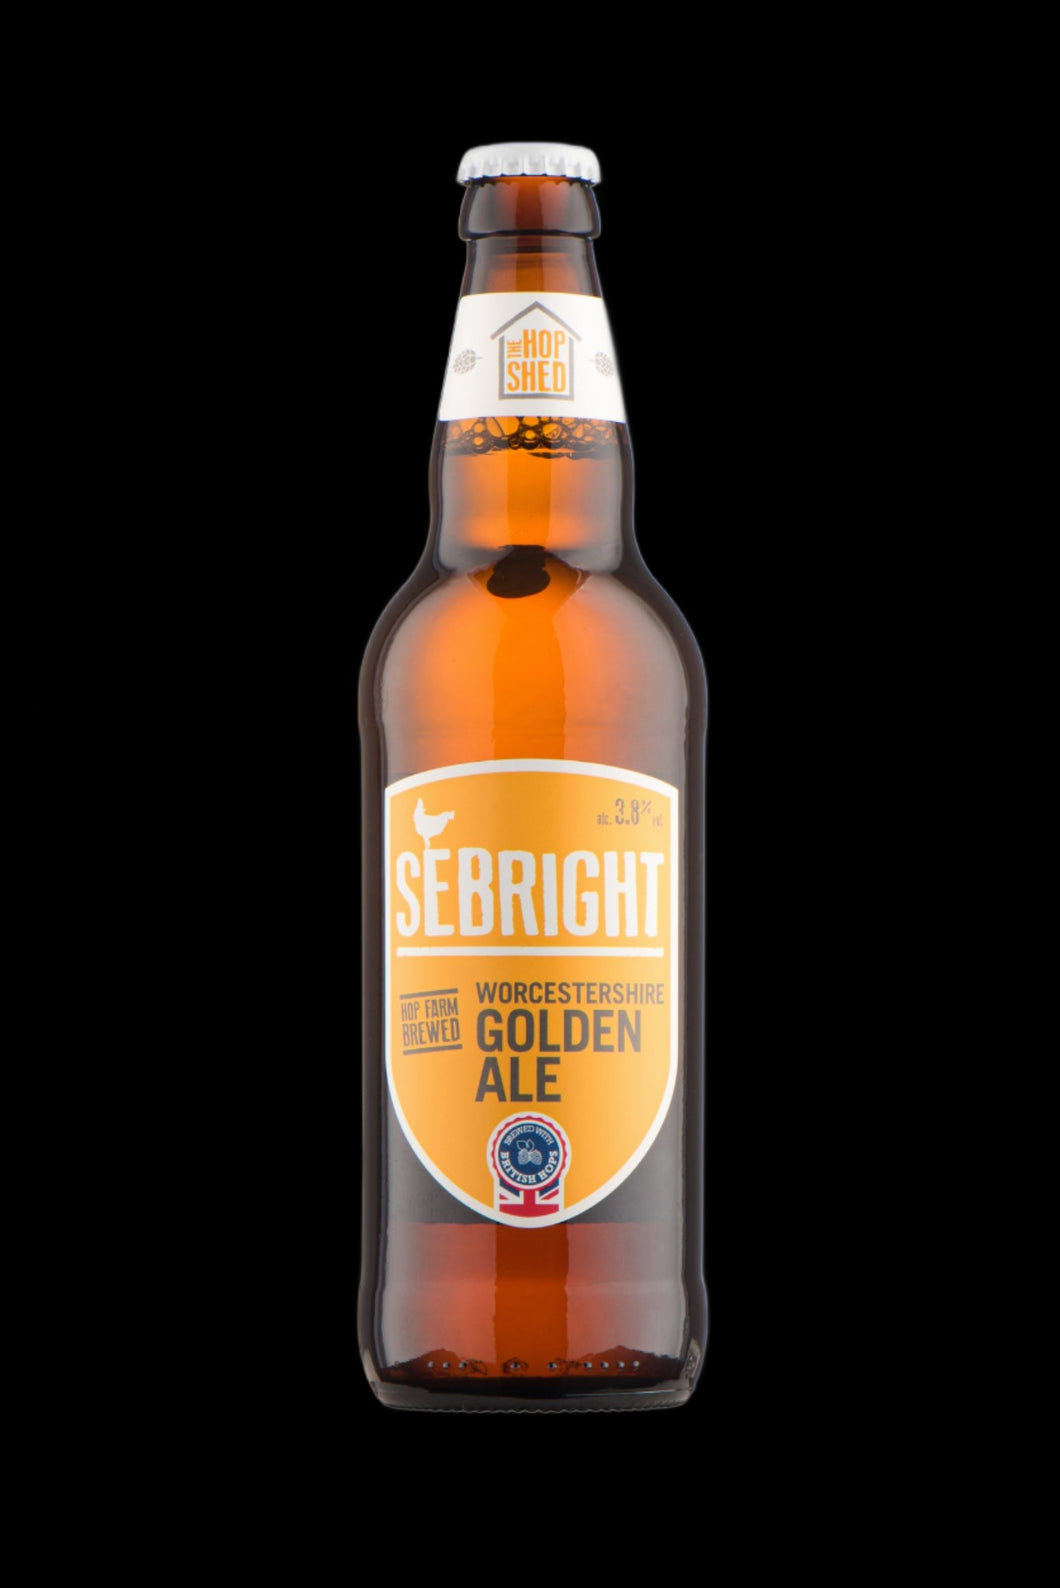 Sebright Worcestershire Golden Ale 3.8% - 12 x 500ml bottles